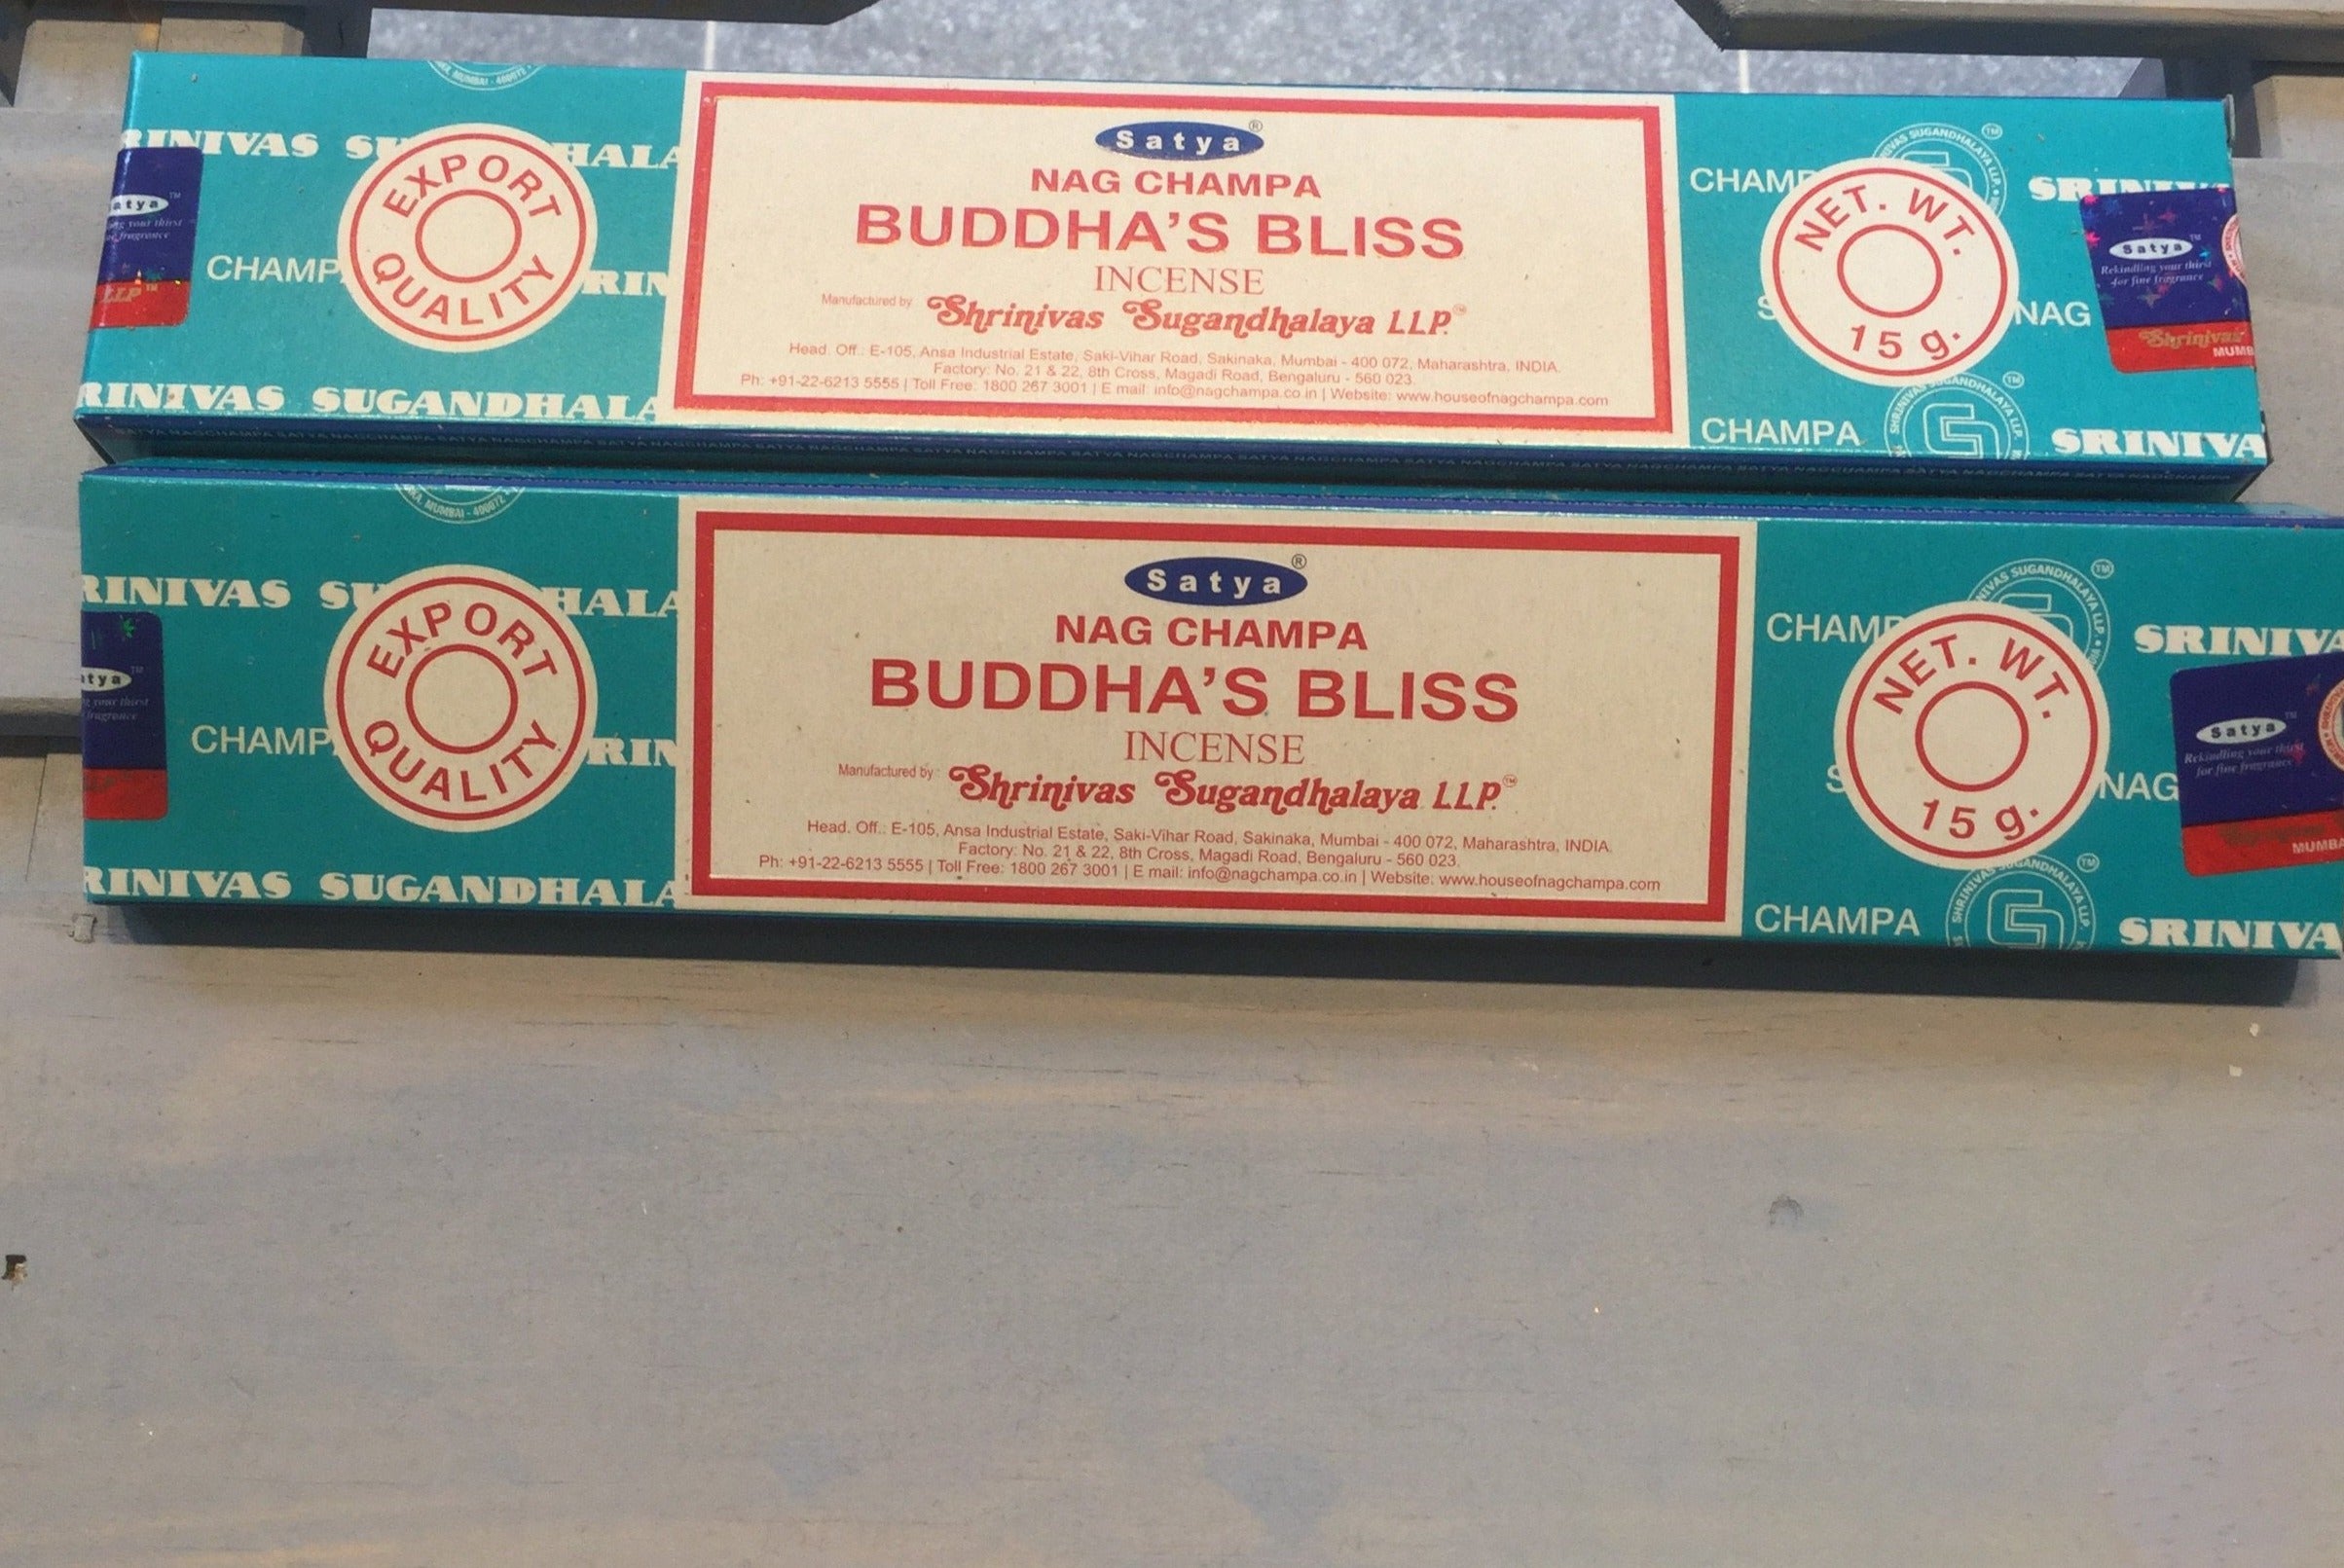 Satya Buddha’s Bliss Incense 15g Pack